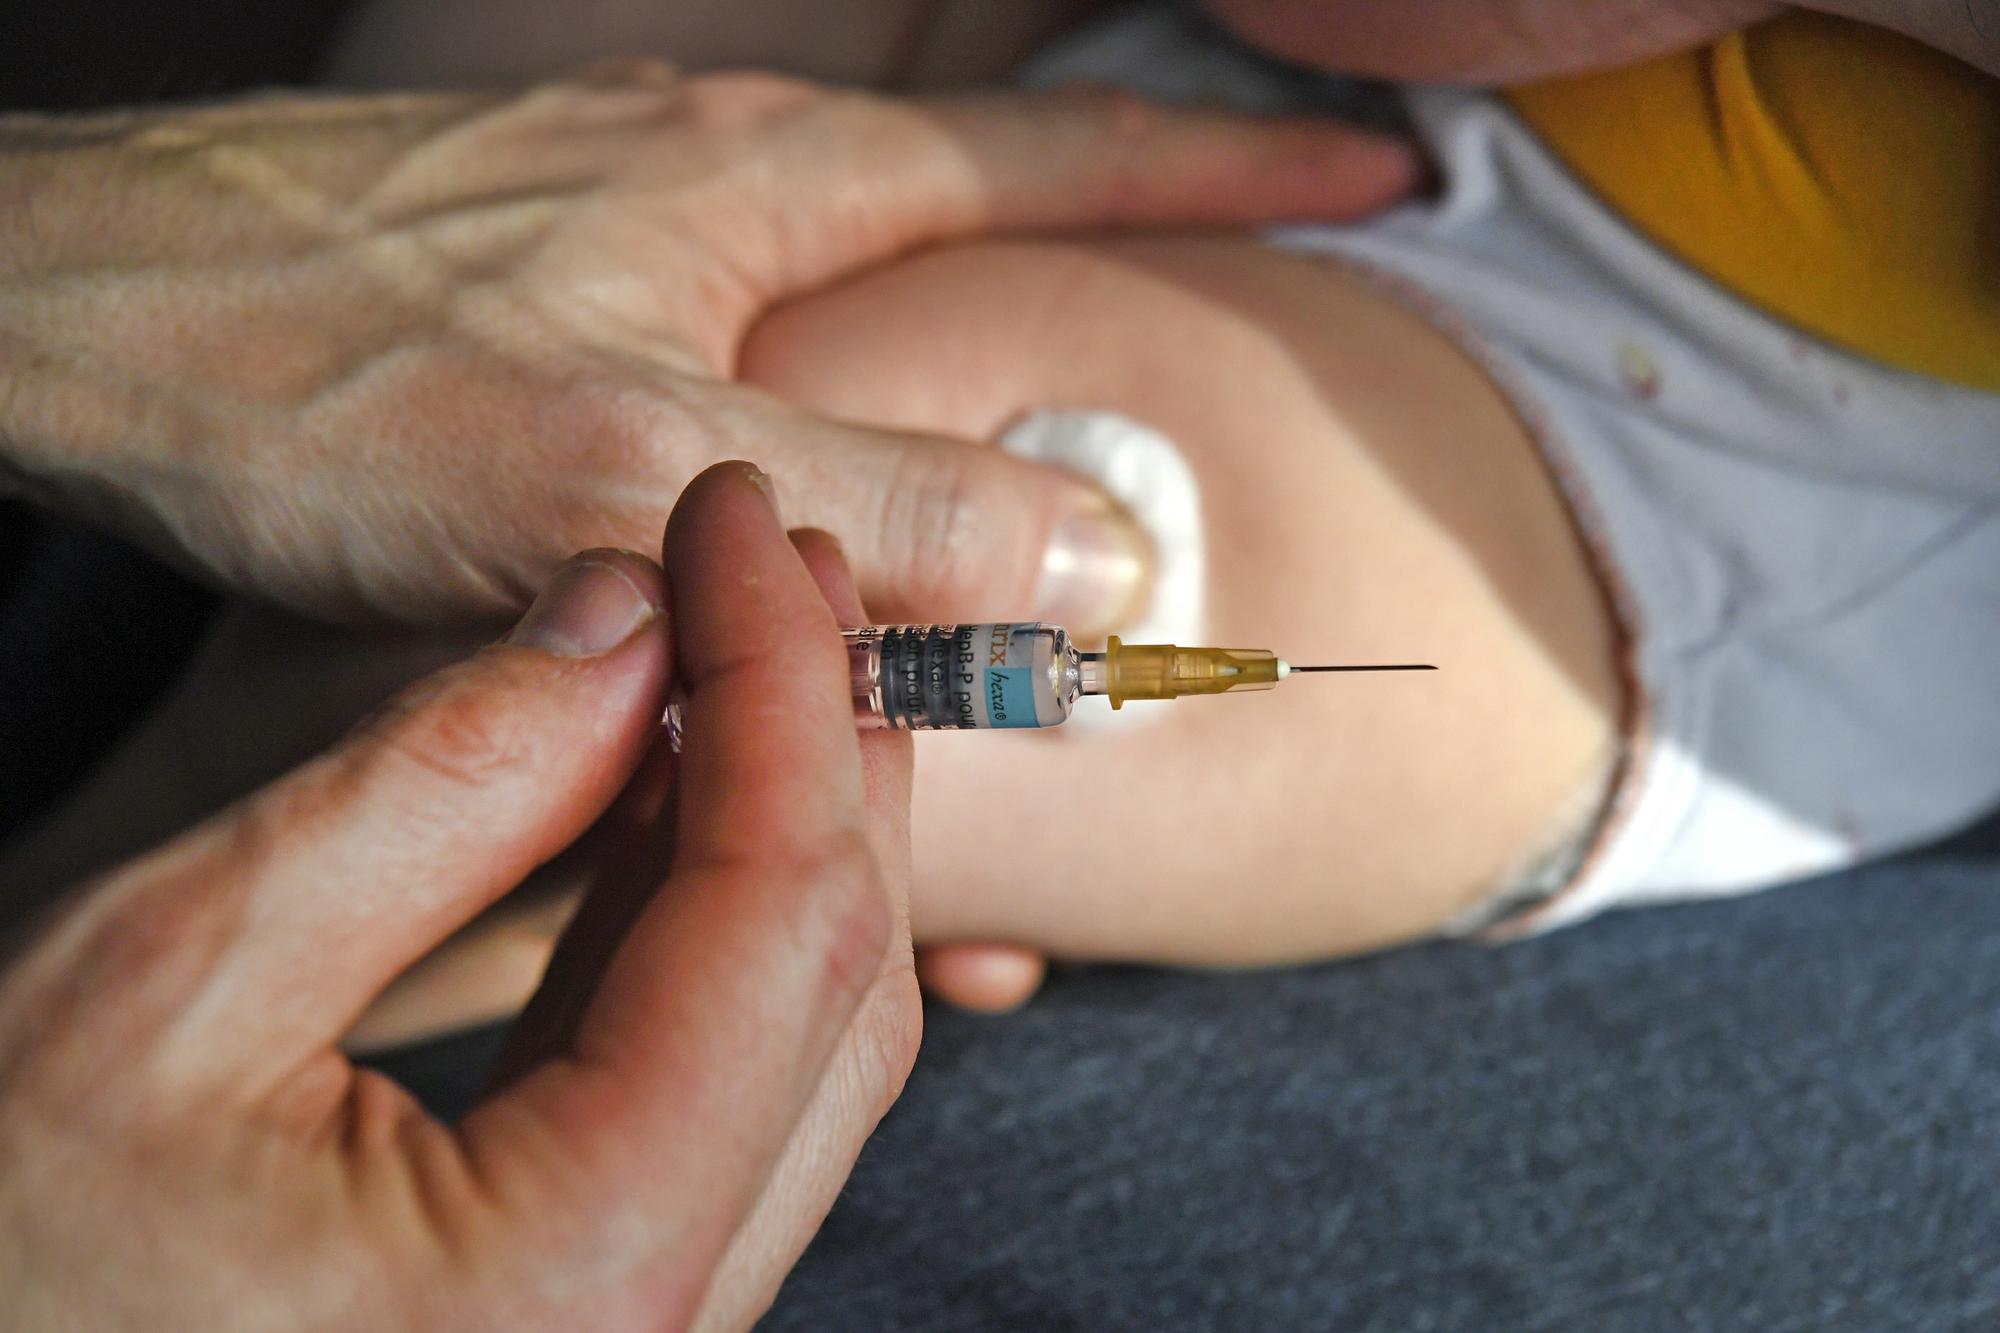 risques du vaccin papillomavirus)